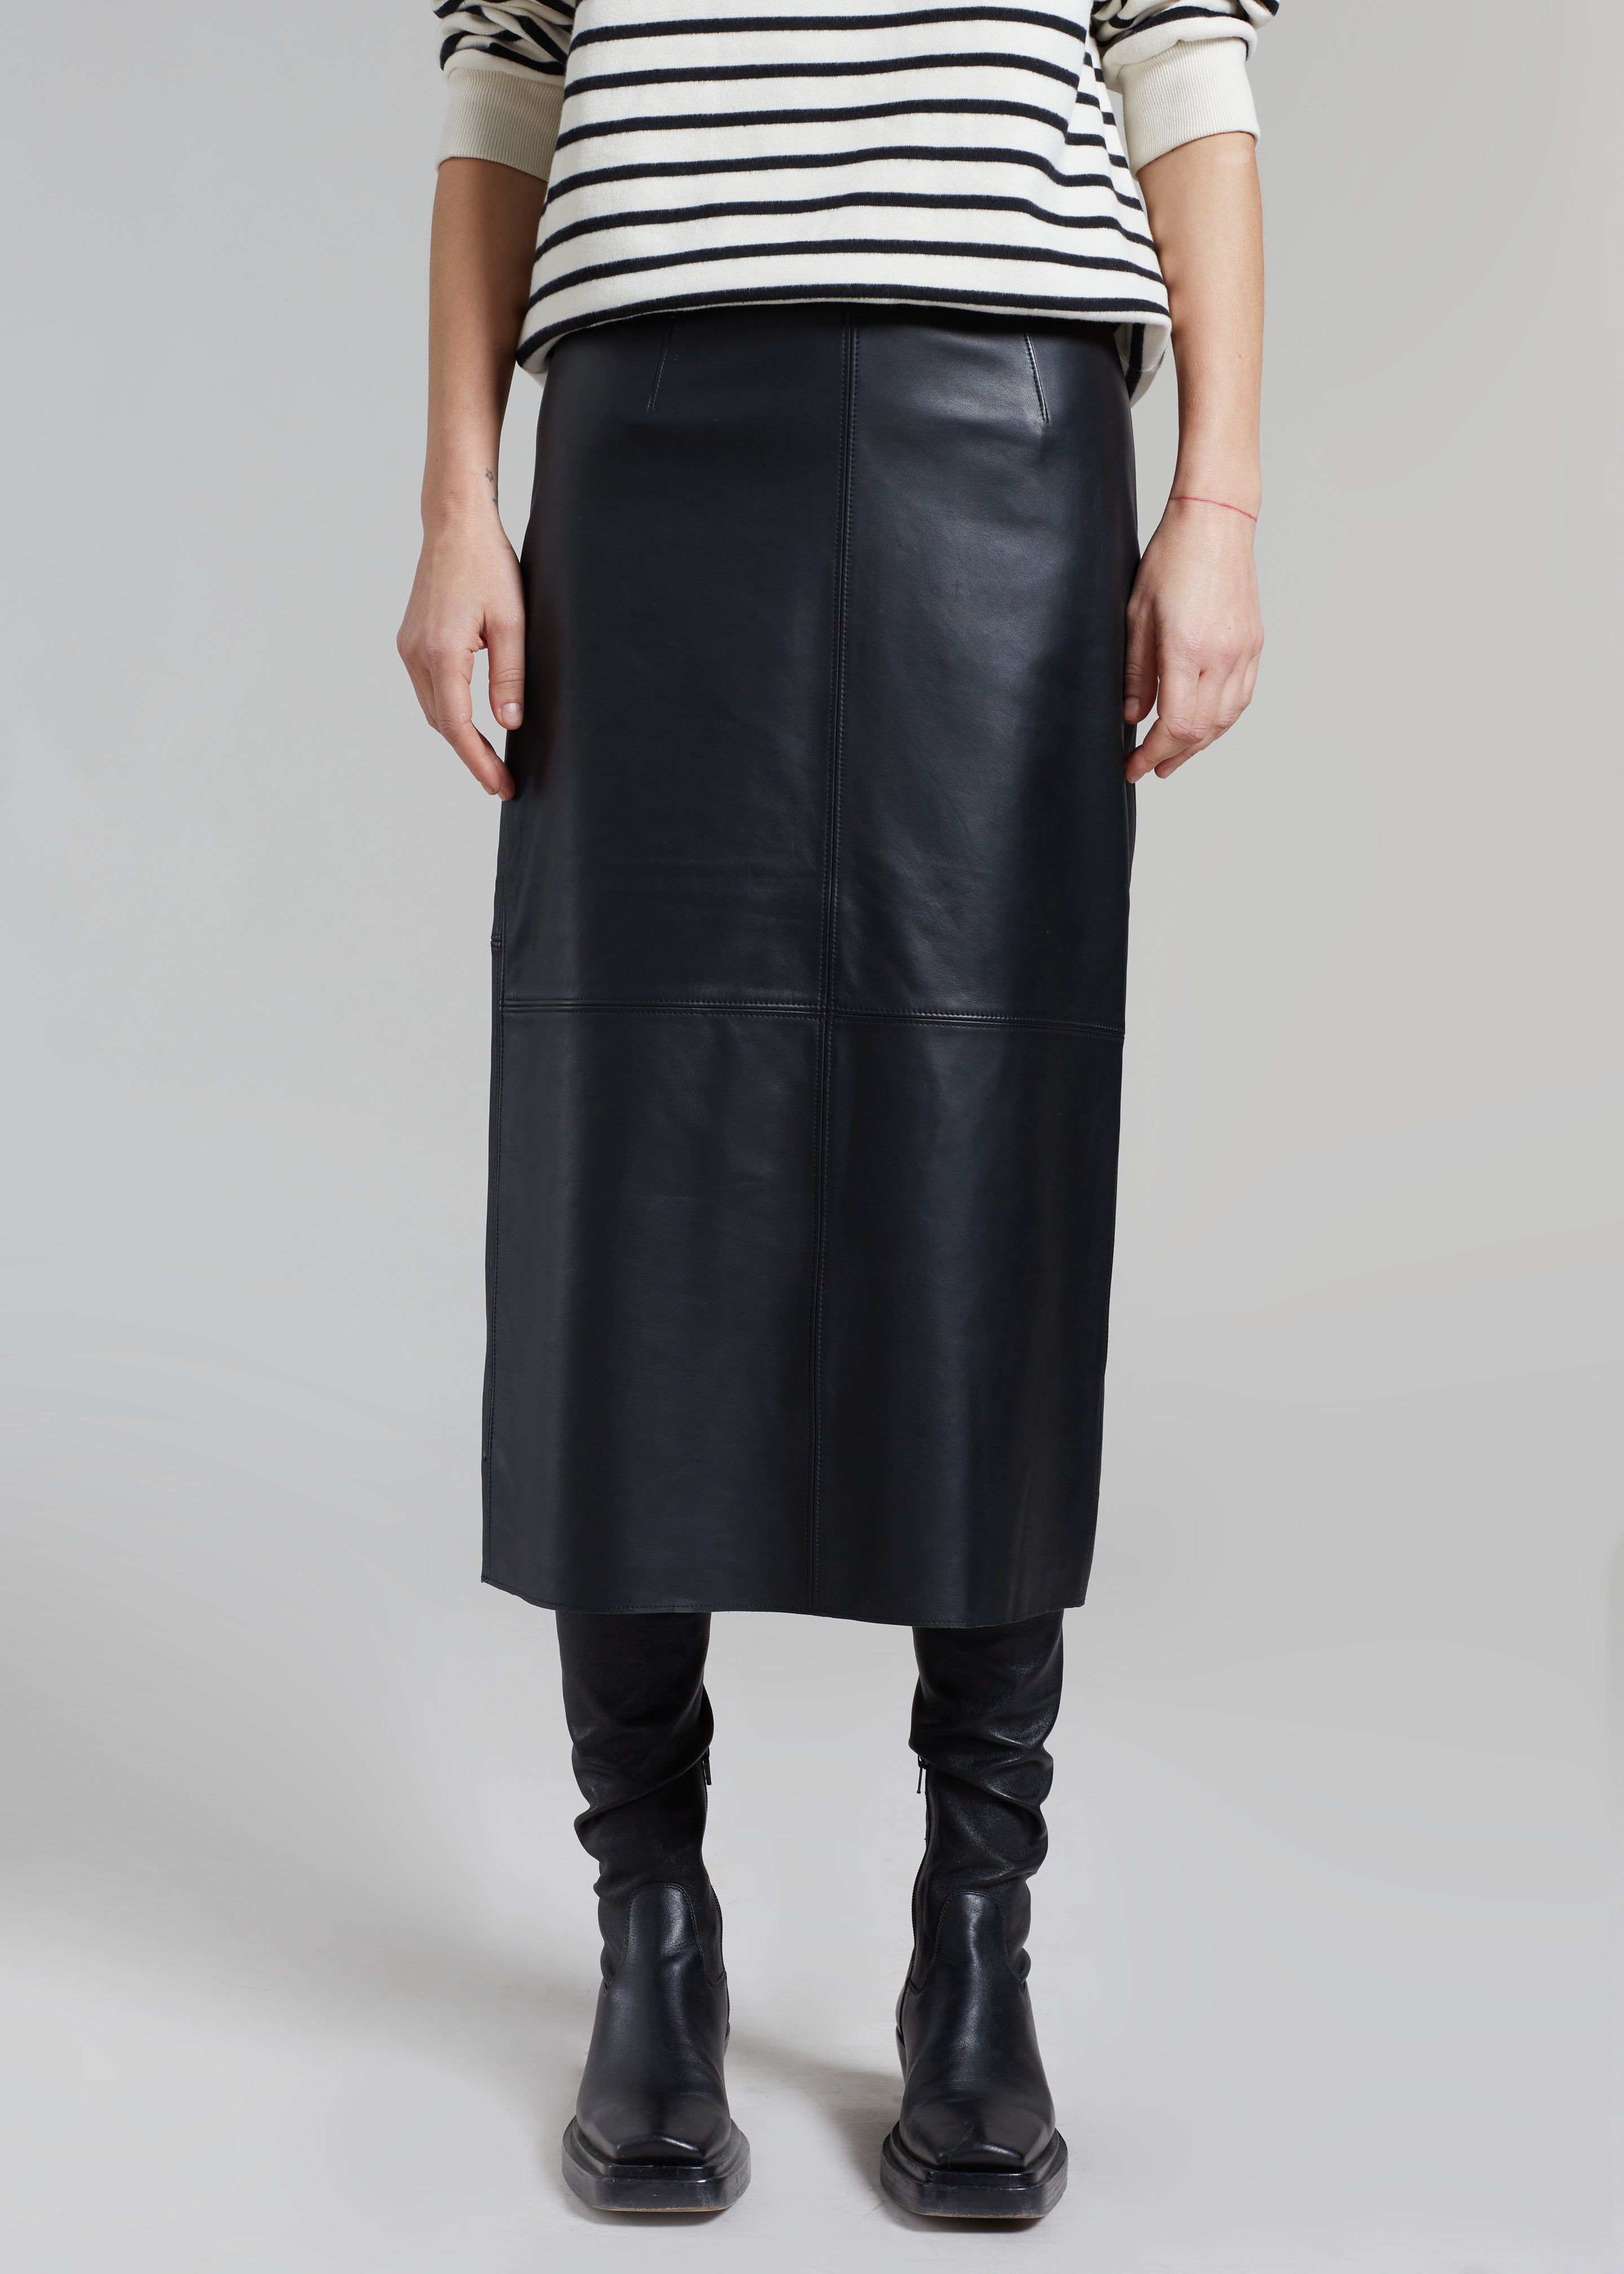 Heather Leather Pencil Skirt - Black - 3